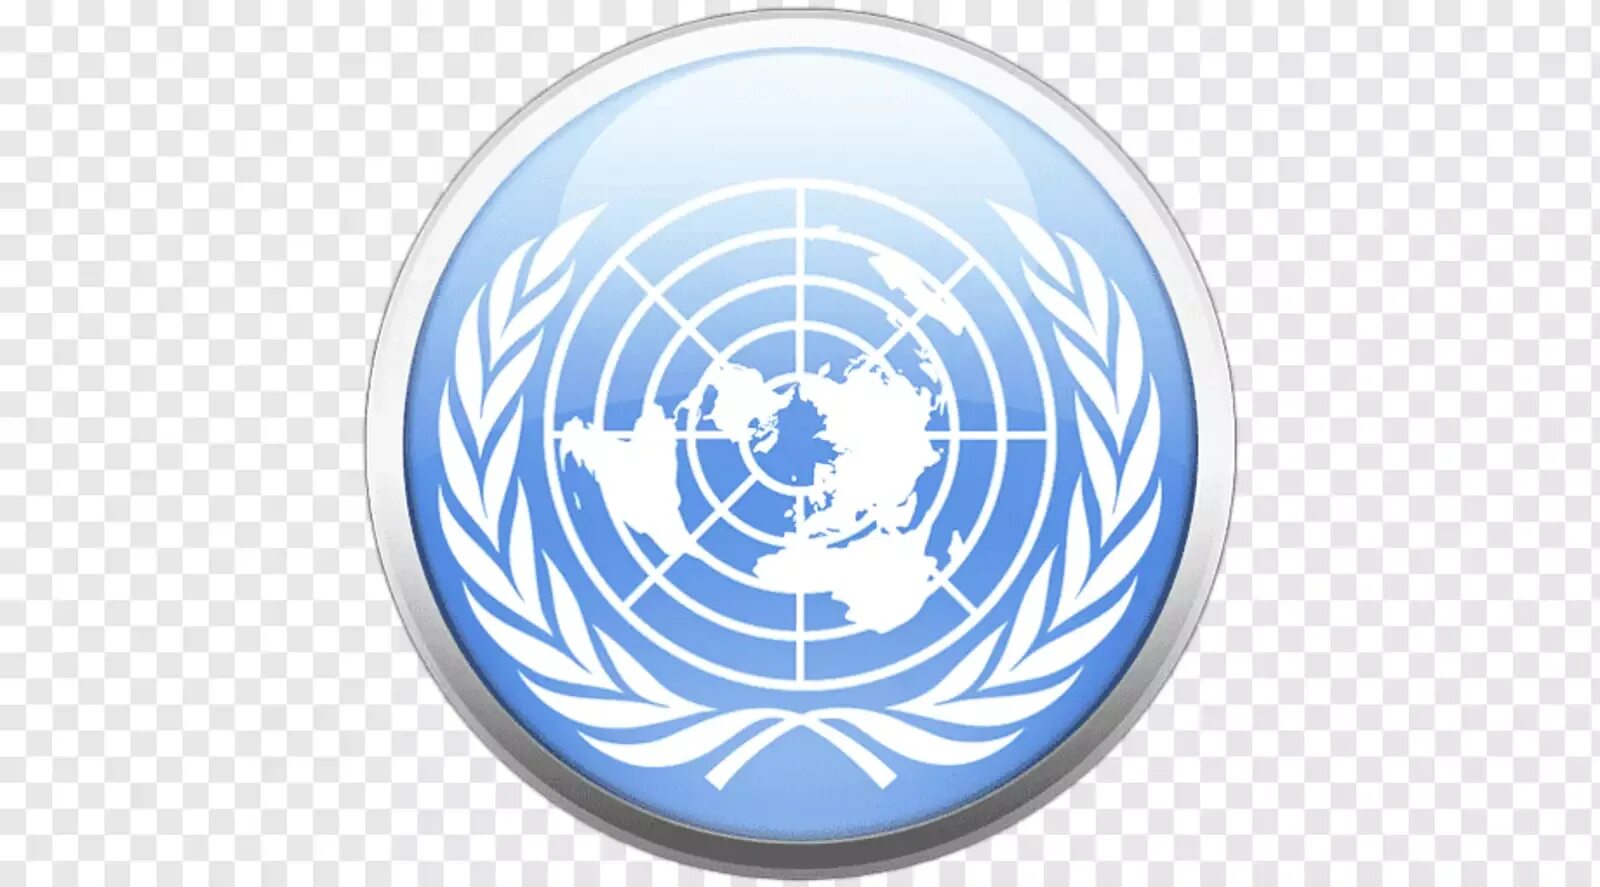 Оон без. Организация Объединенных наций эмблема. Организация Объединённых наций лого. Совет безопасности ООН лого. Герб ООН.